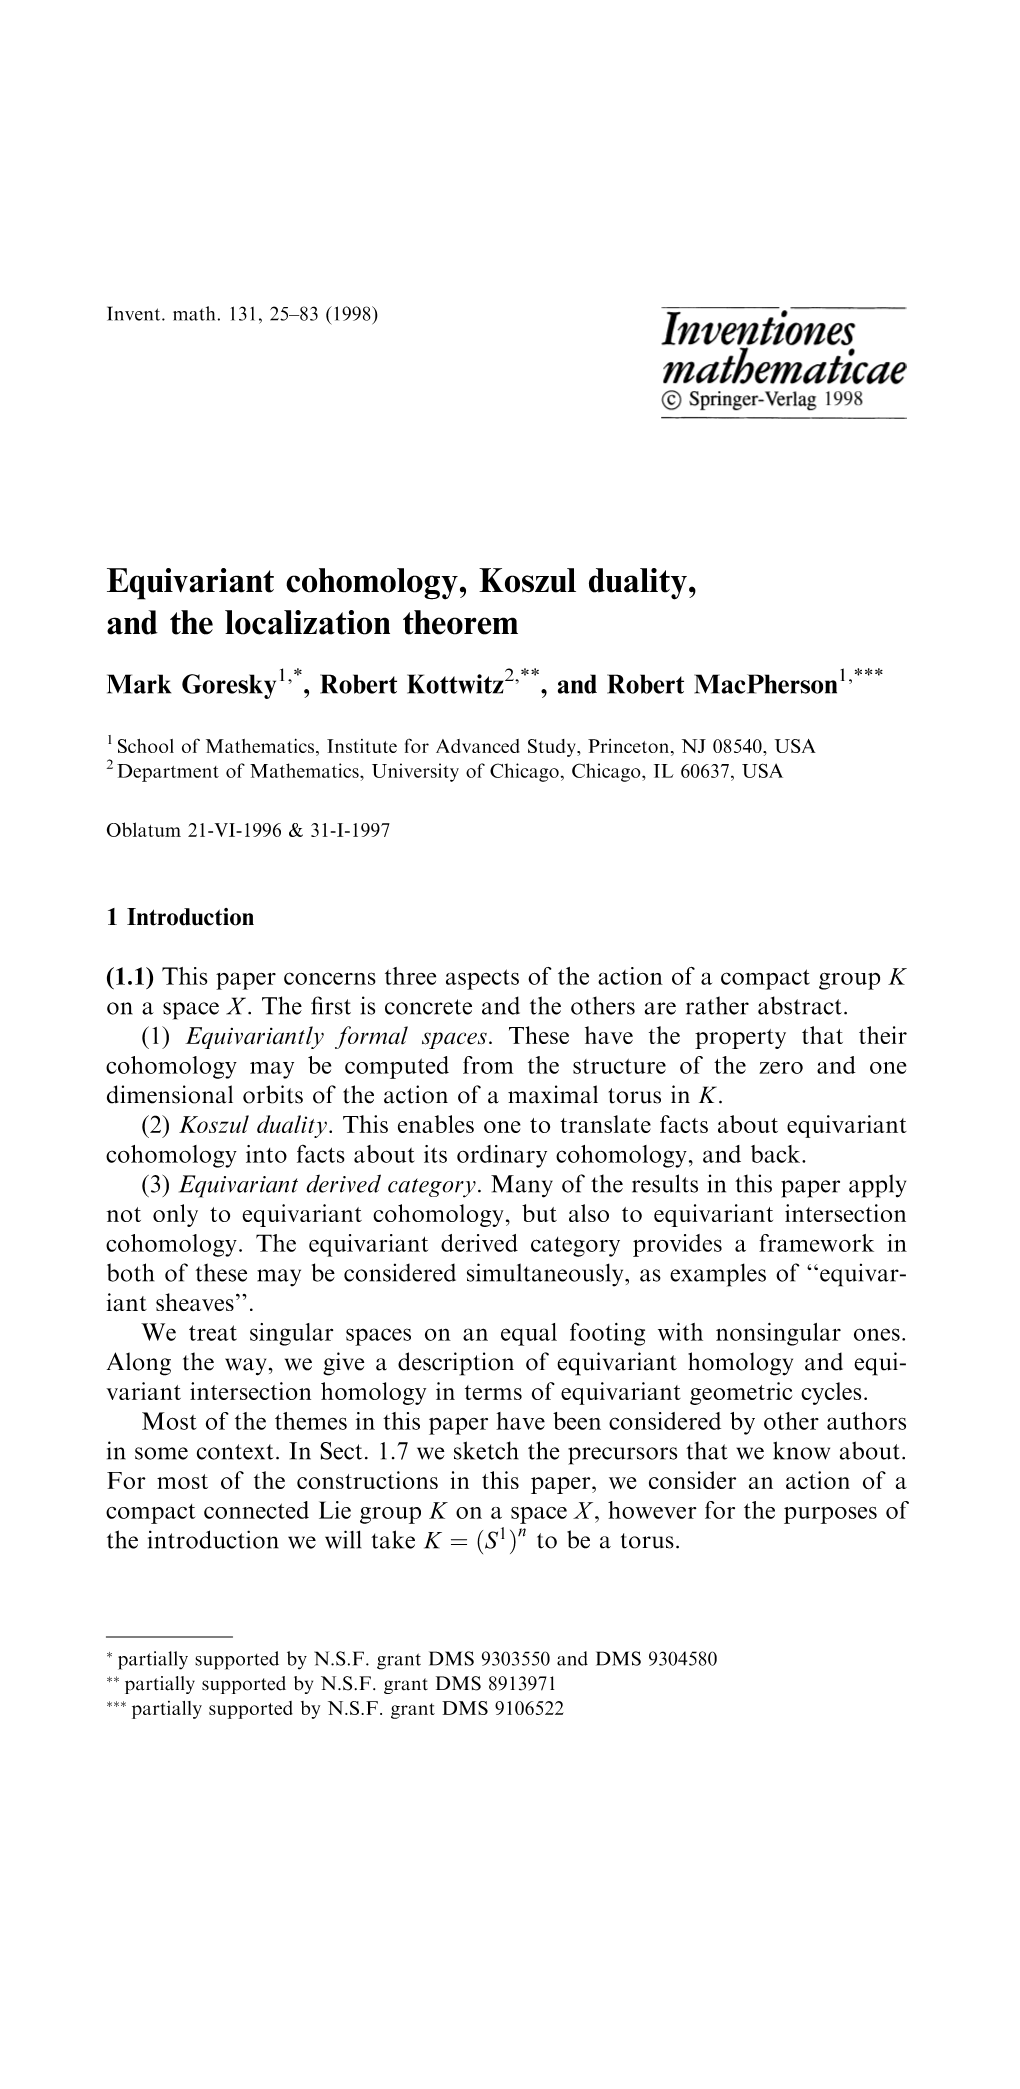 Equivariant Cohomology, Koszul Duality, and the Localization Theorem